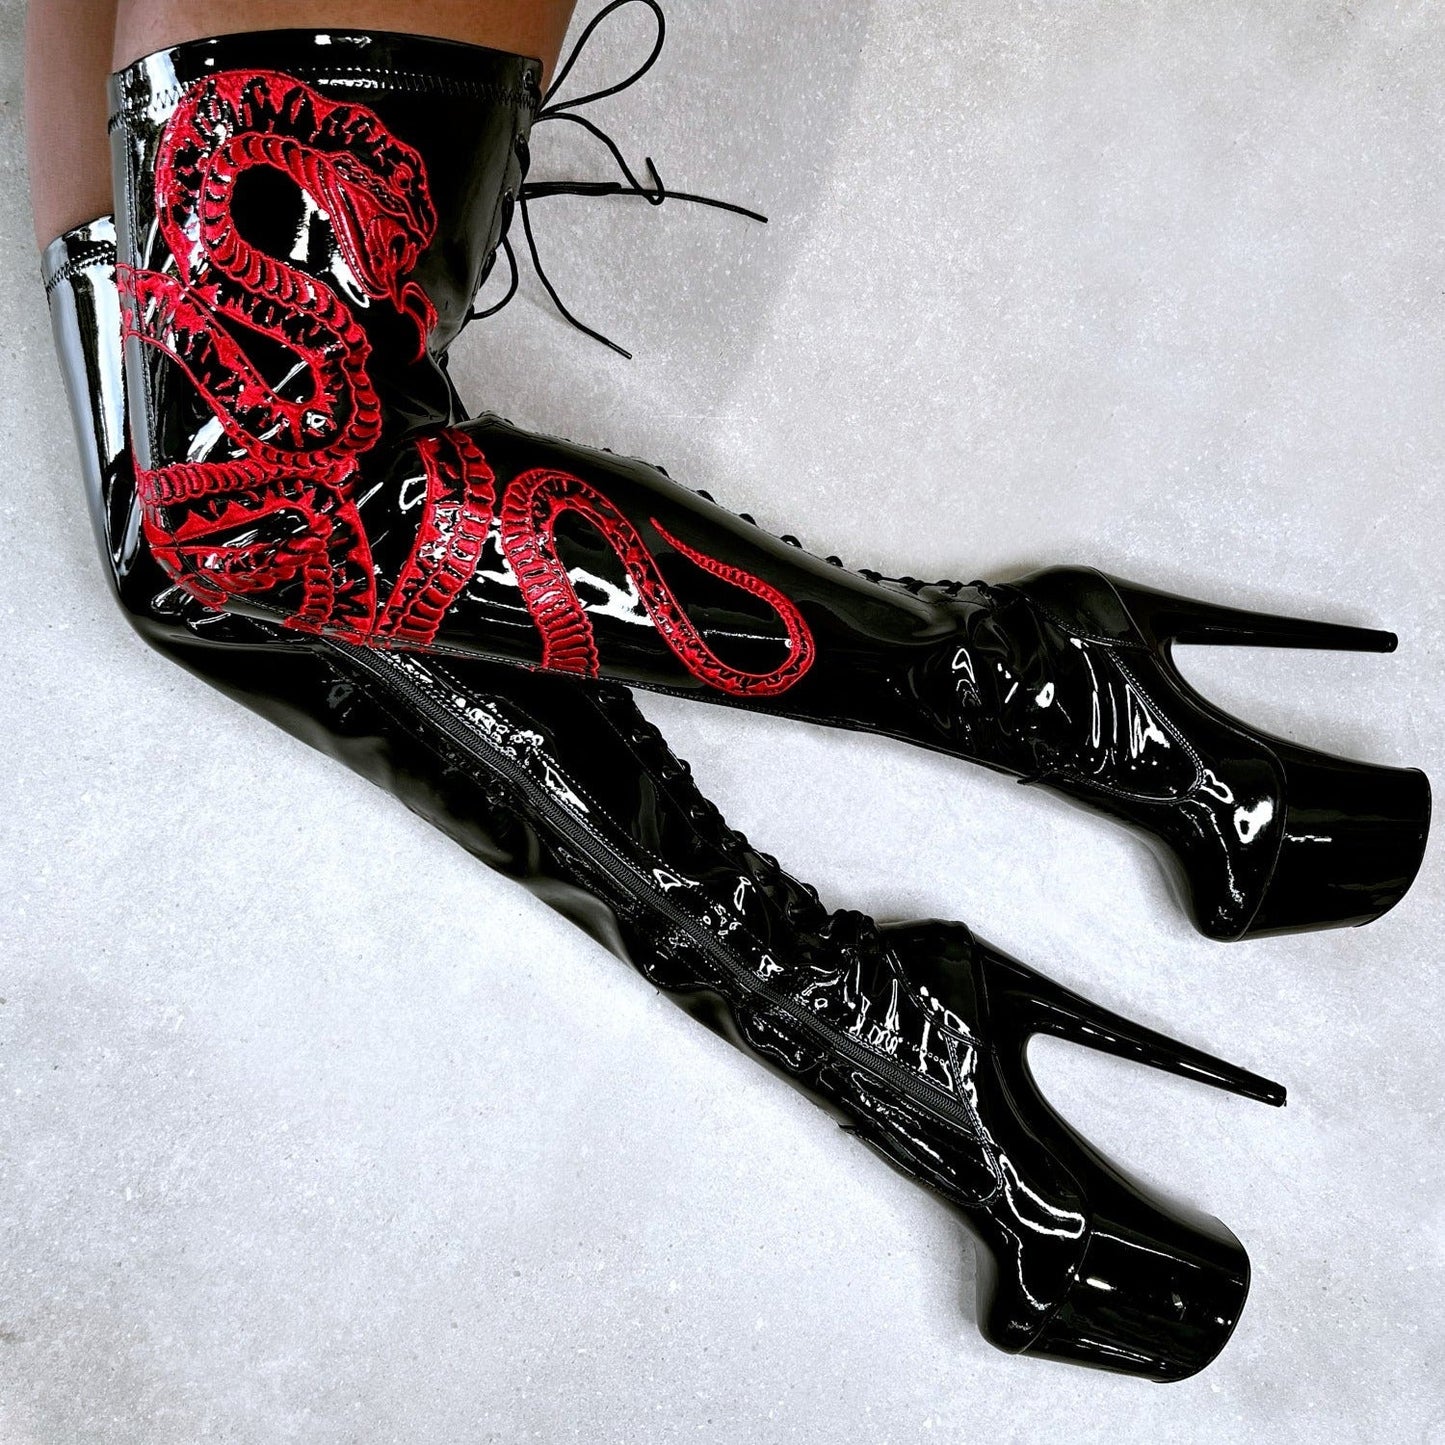 VIPER Boot Black with Red Thigh High - 8INCH, stripper shoe, stripper heel, pole heel, not a pleaser, platform, dancer, pole dance, floor work